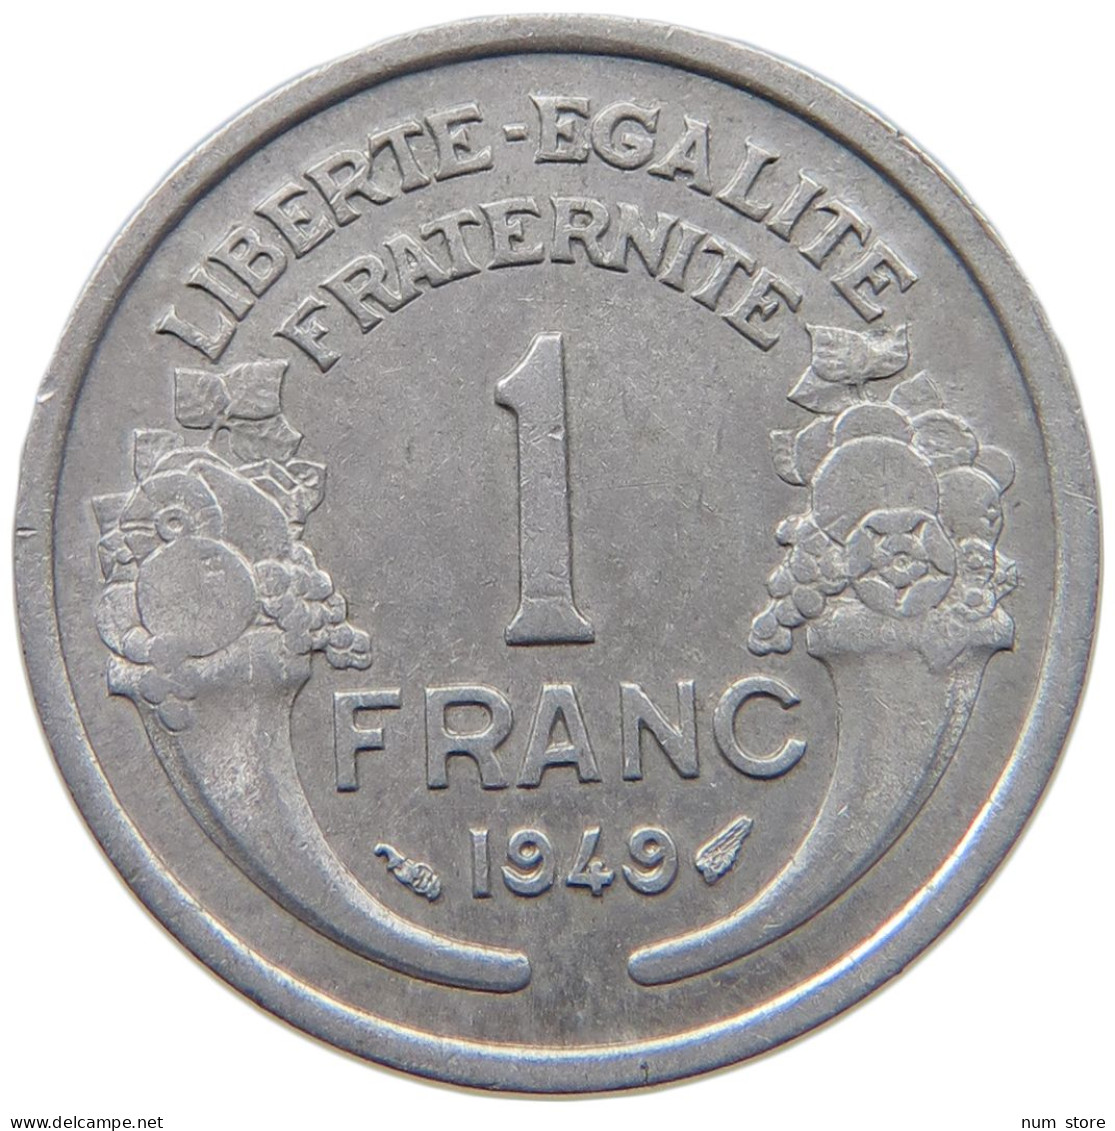 FRANCE 1 FRANC 1949 #c078 0485 - 1 Franc